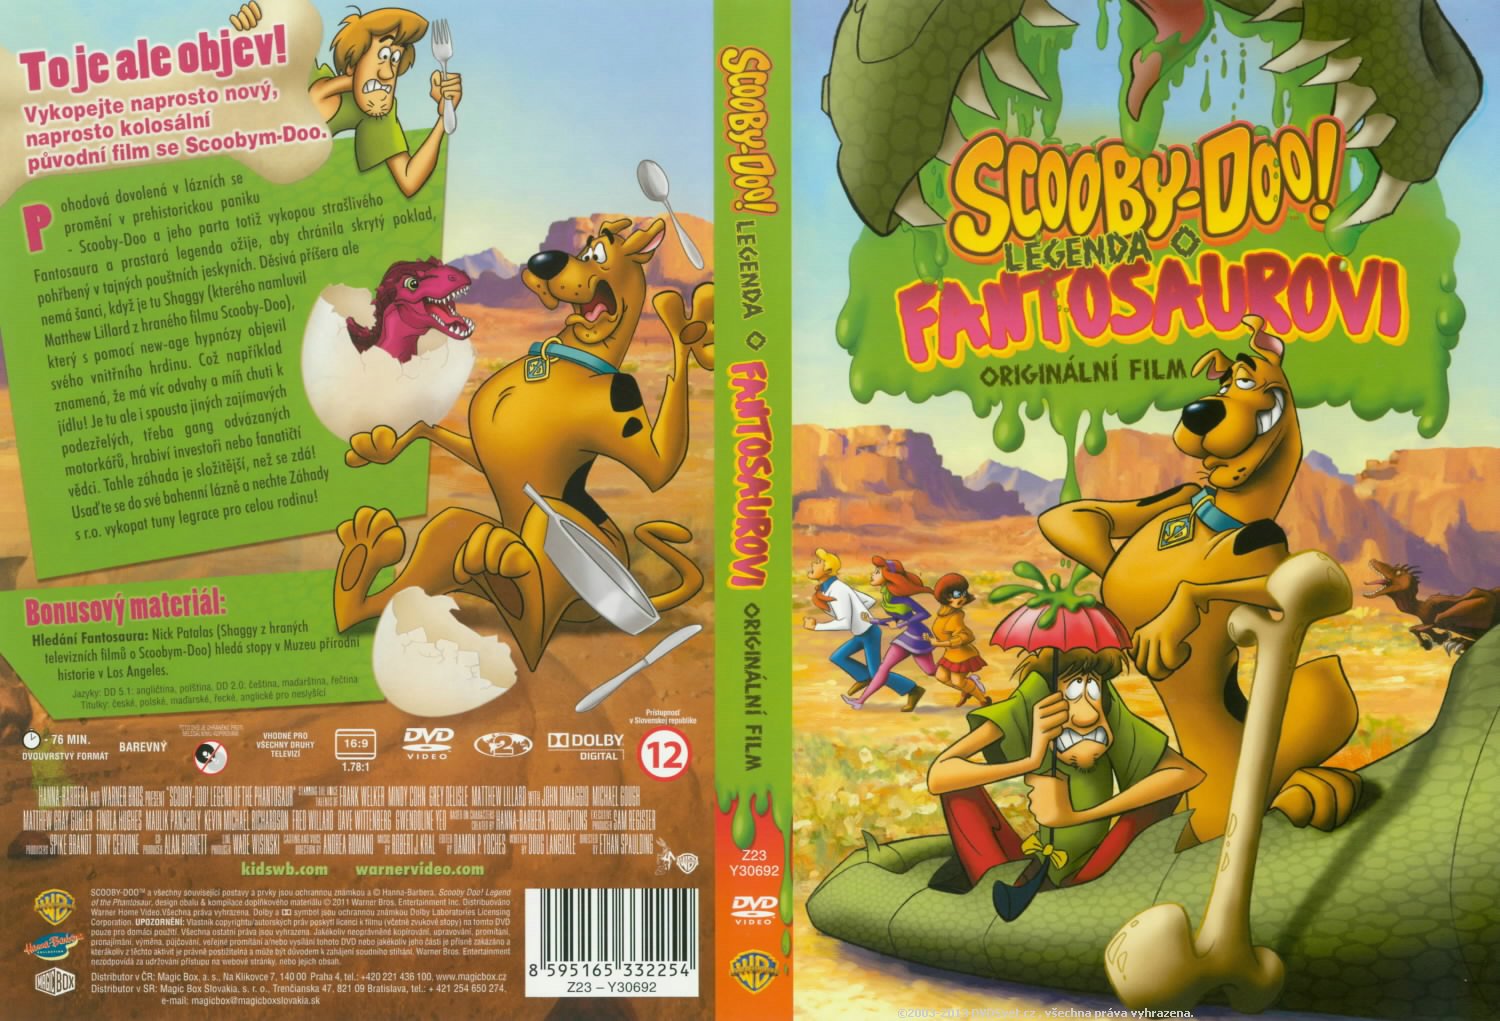  Scooby doo legenda o Fantosaurovi 2011